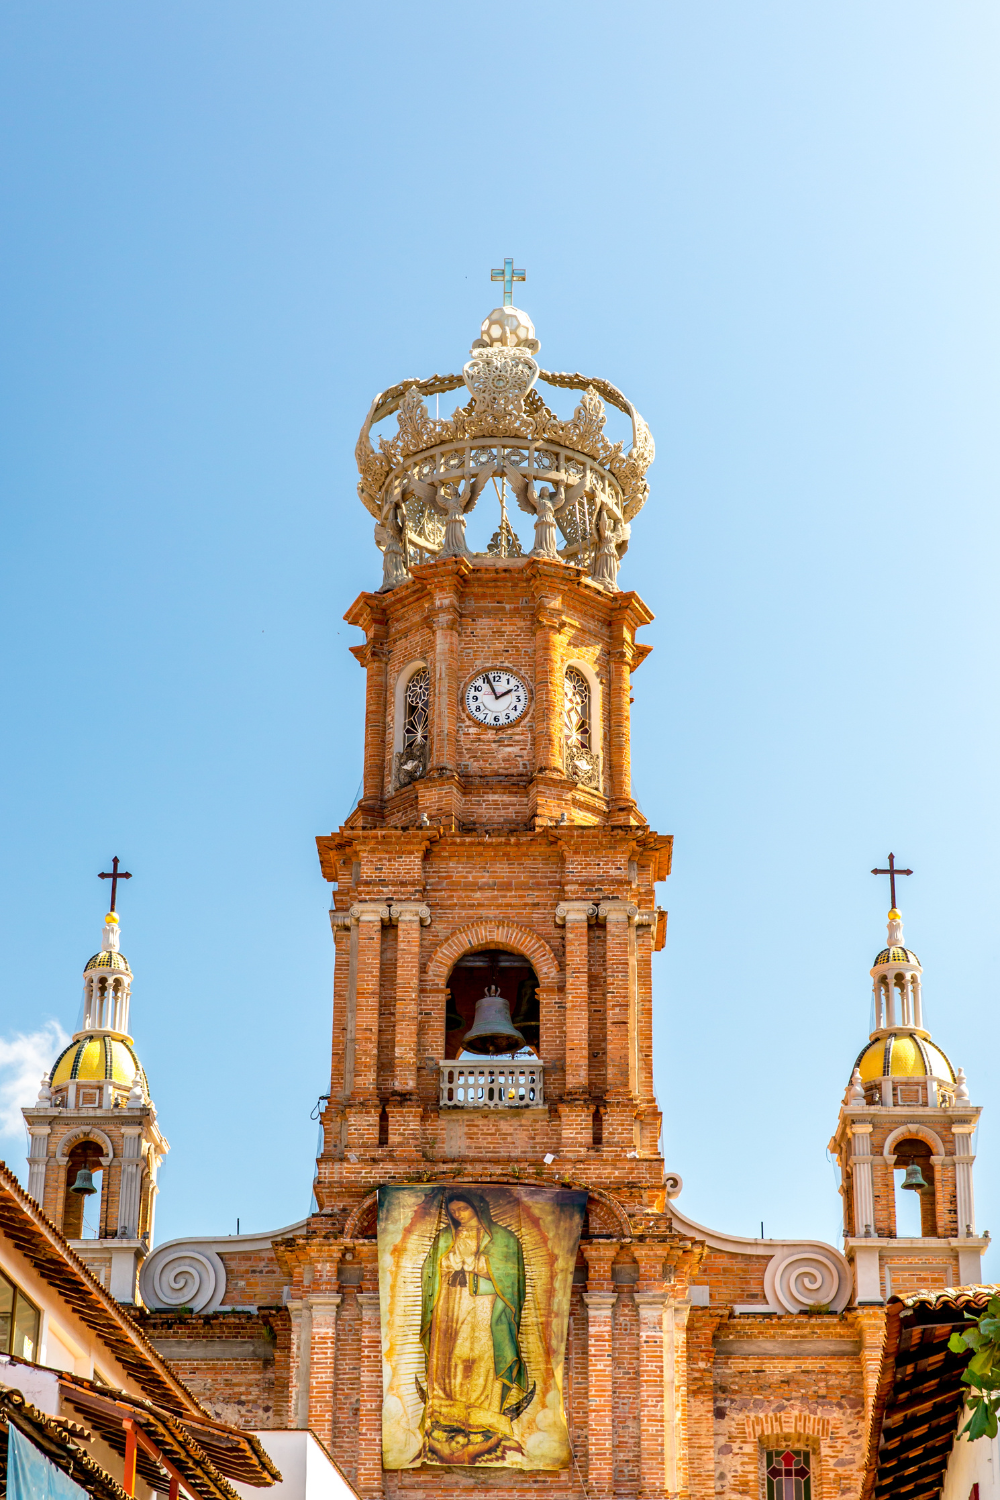 Old clock tower in Puerto Vallarta Mexico